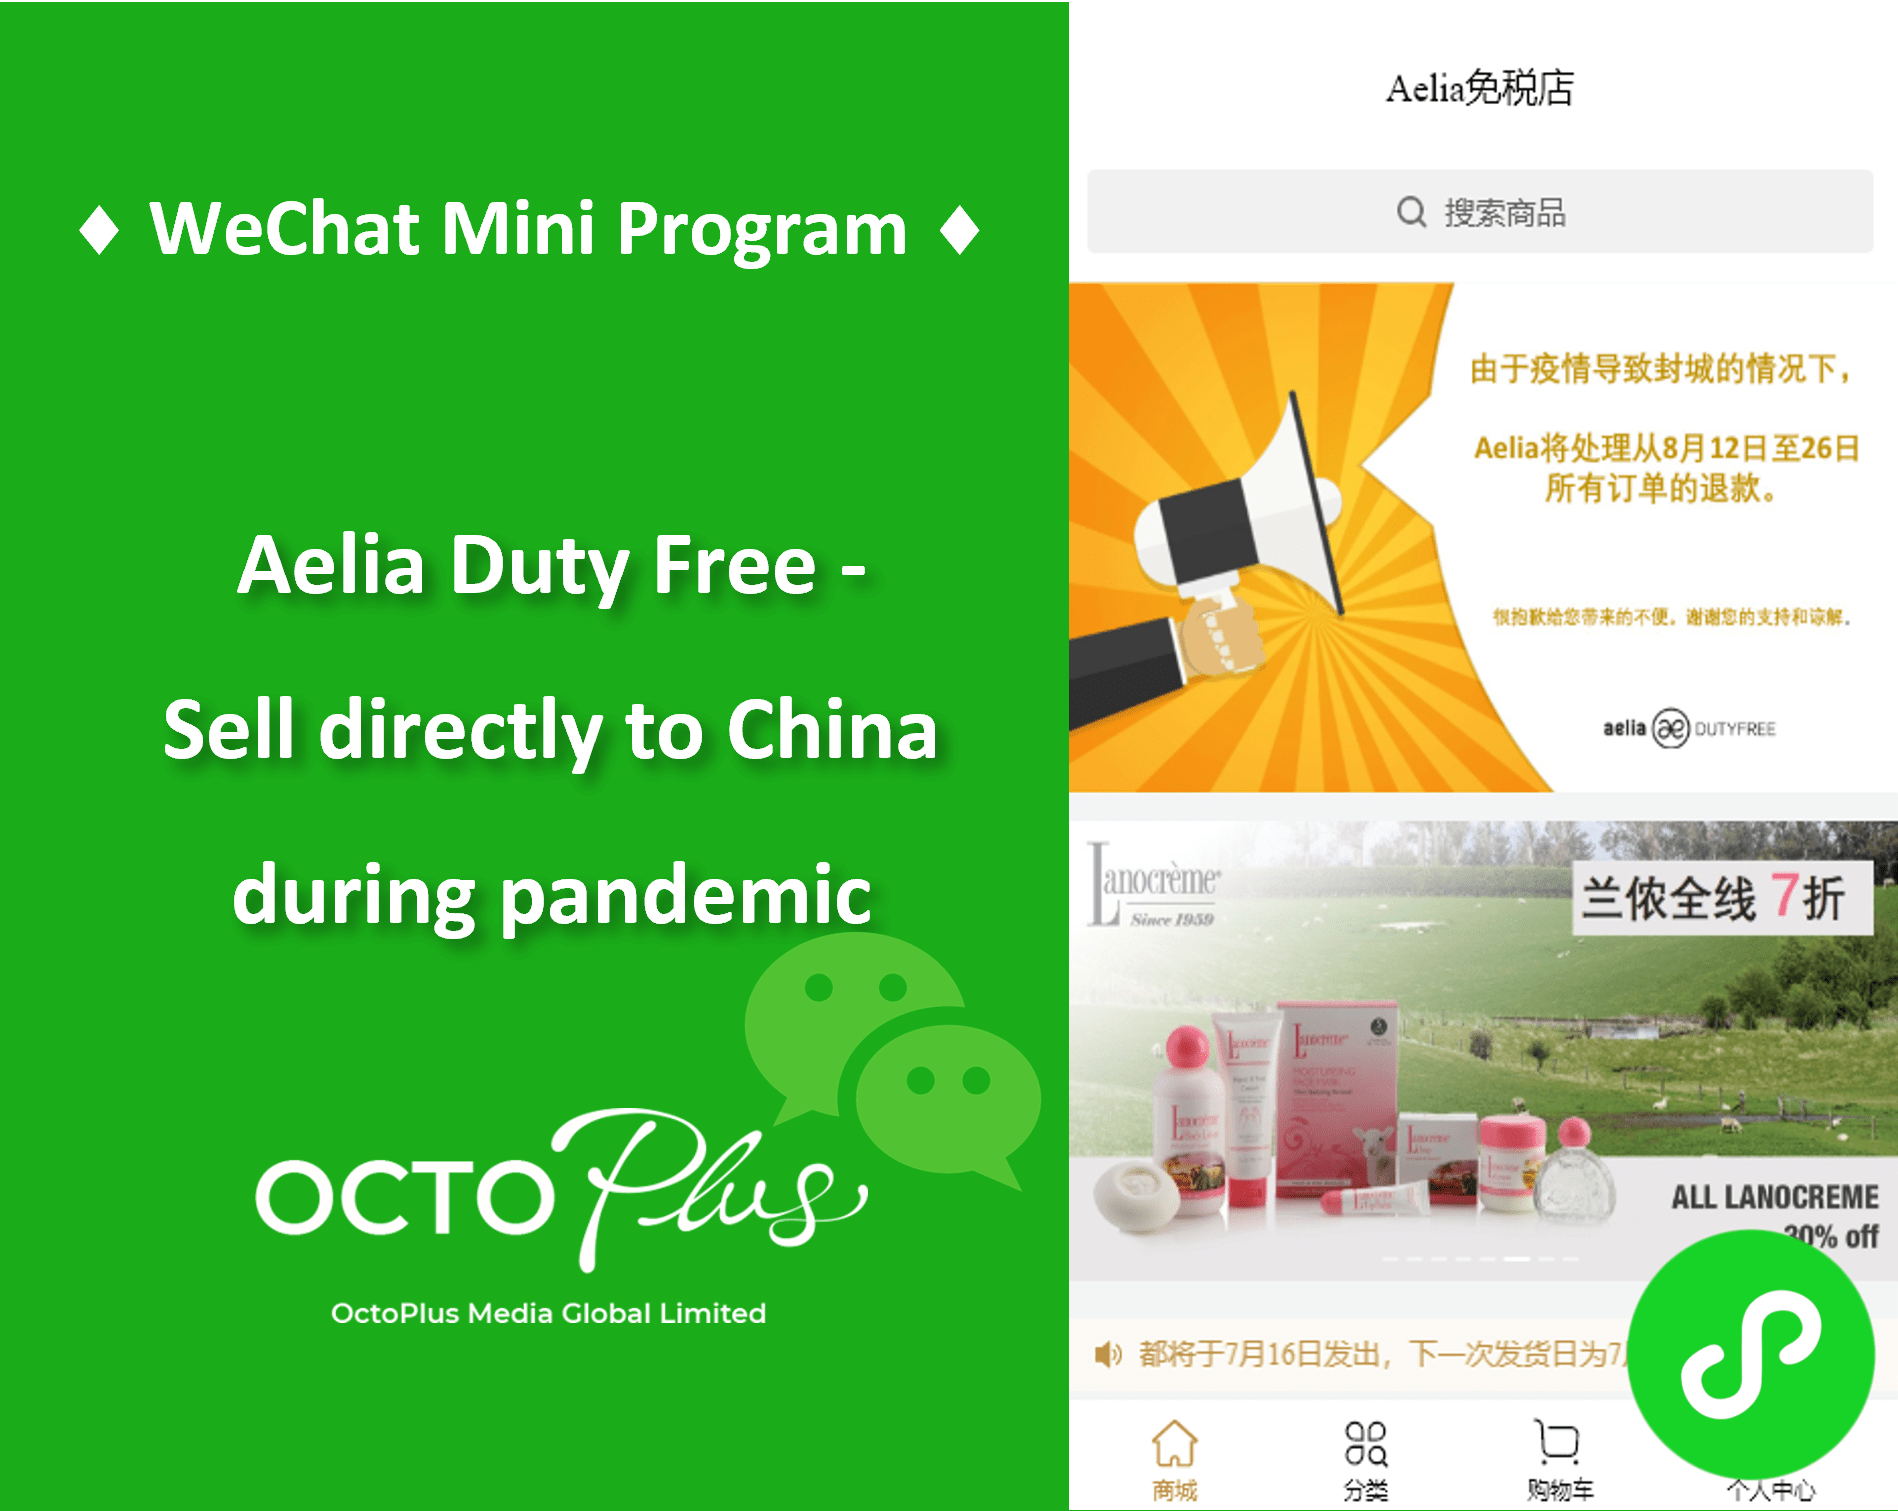 ﻿Selling to China Ecommerce WeChat Miniprogram - Aelia Duty Free, New Zealand